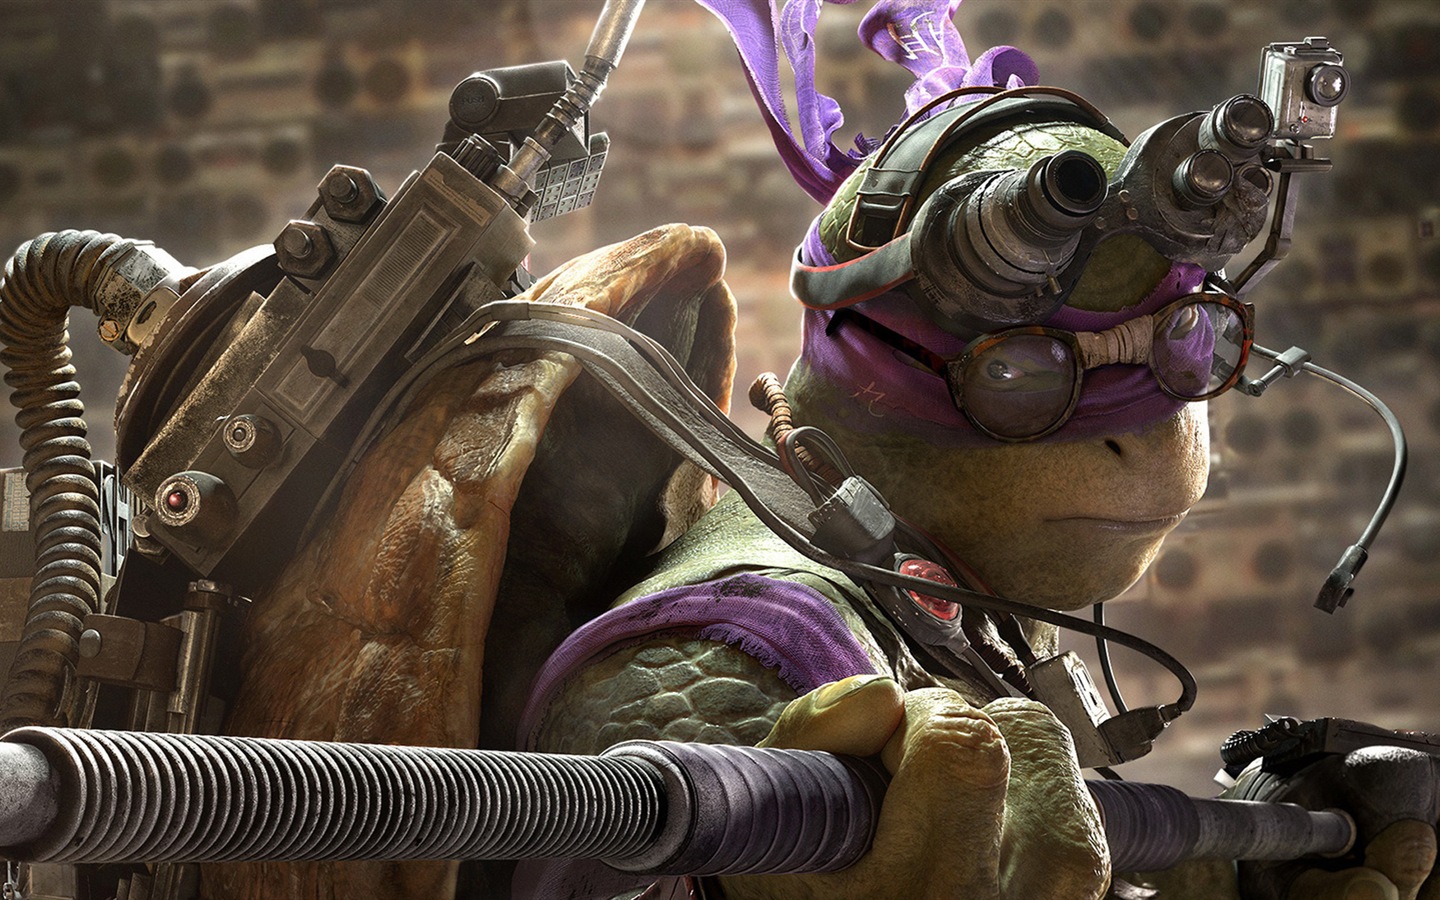 2014 Teenage Mutant Ninja Turtles HD movie wallpapers #3 - 1440x900